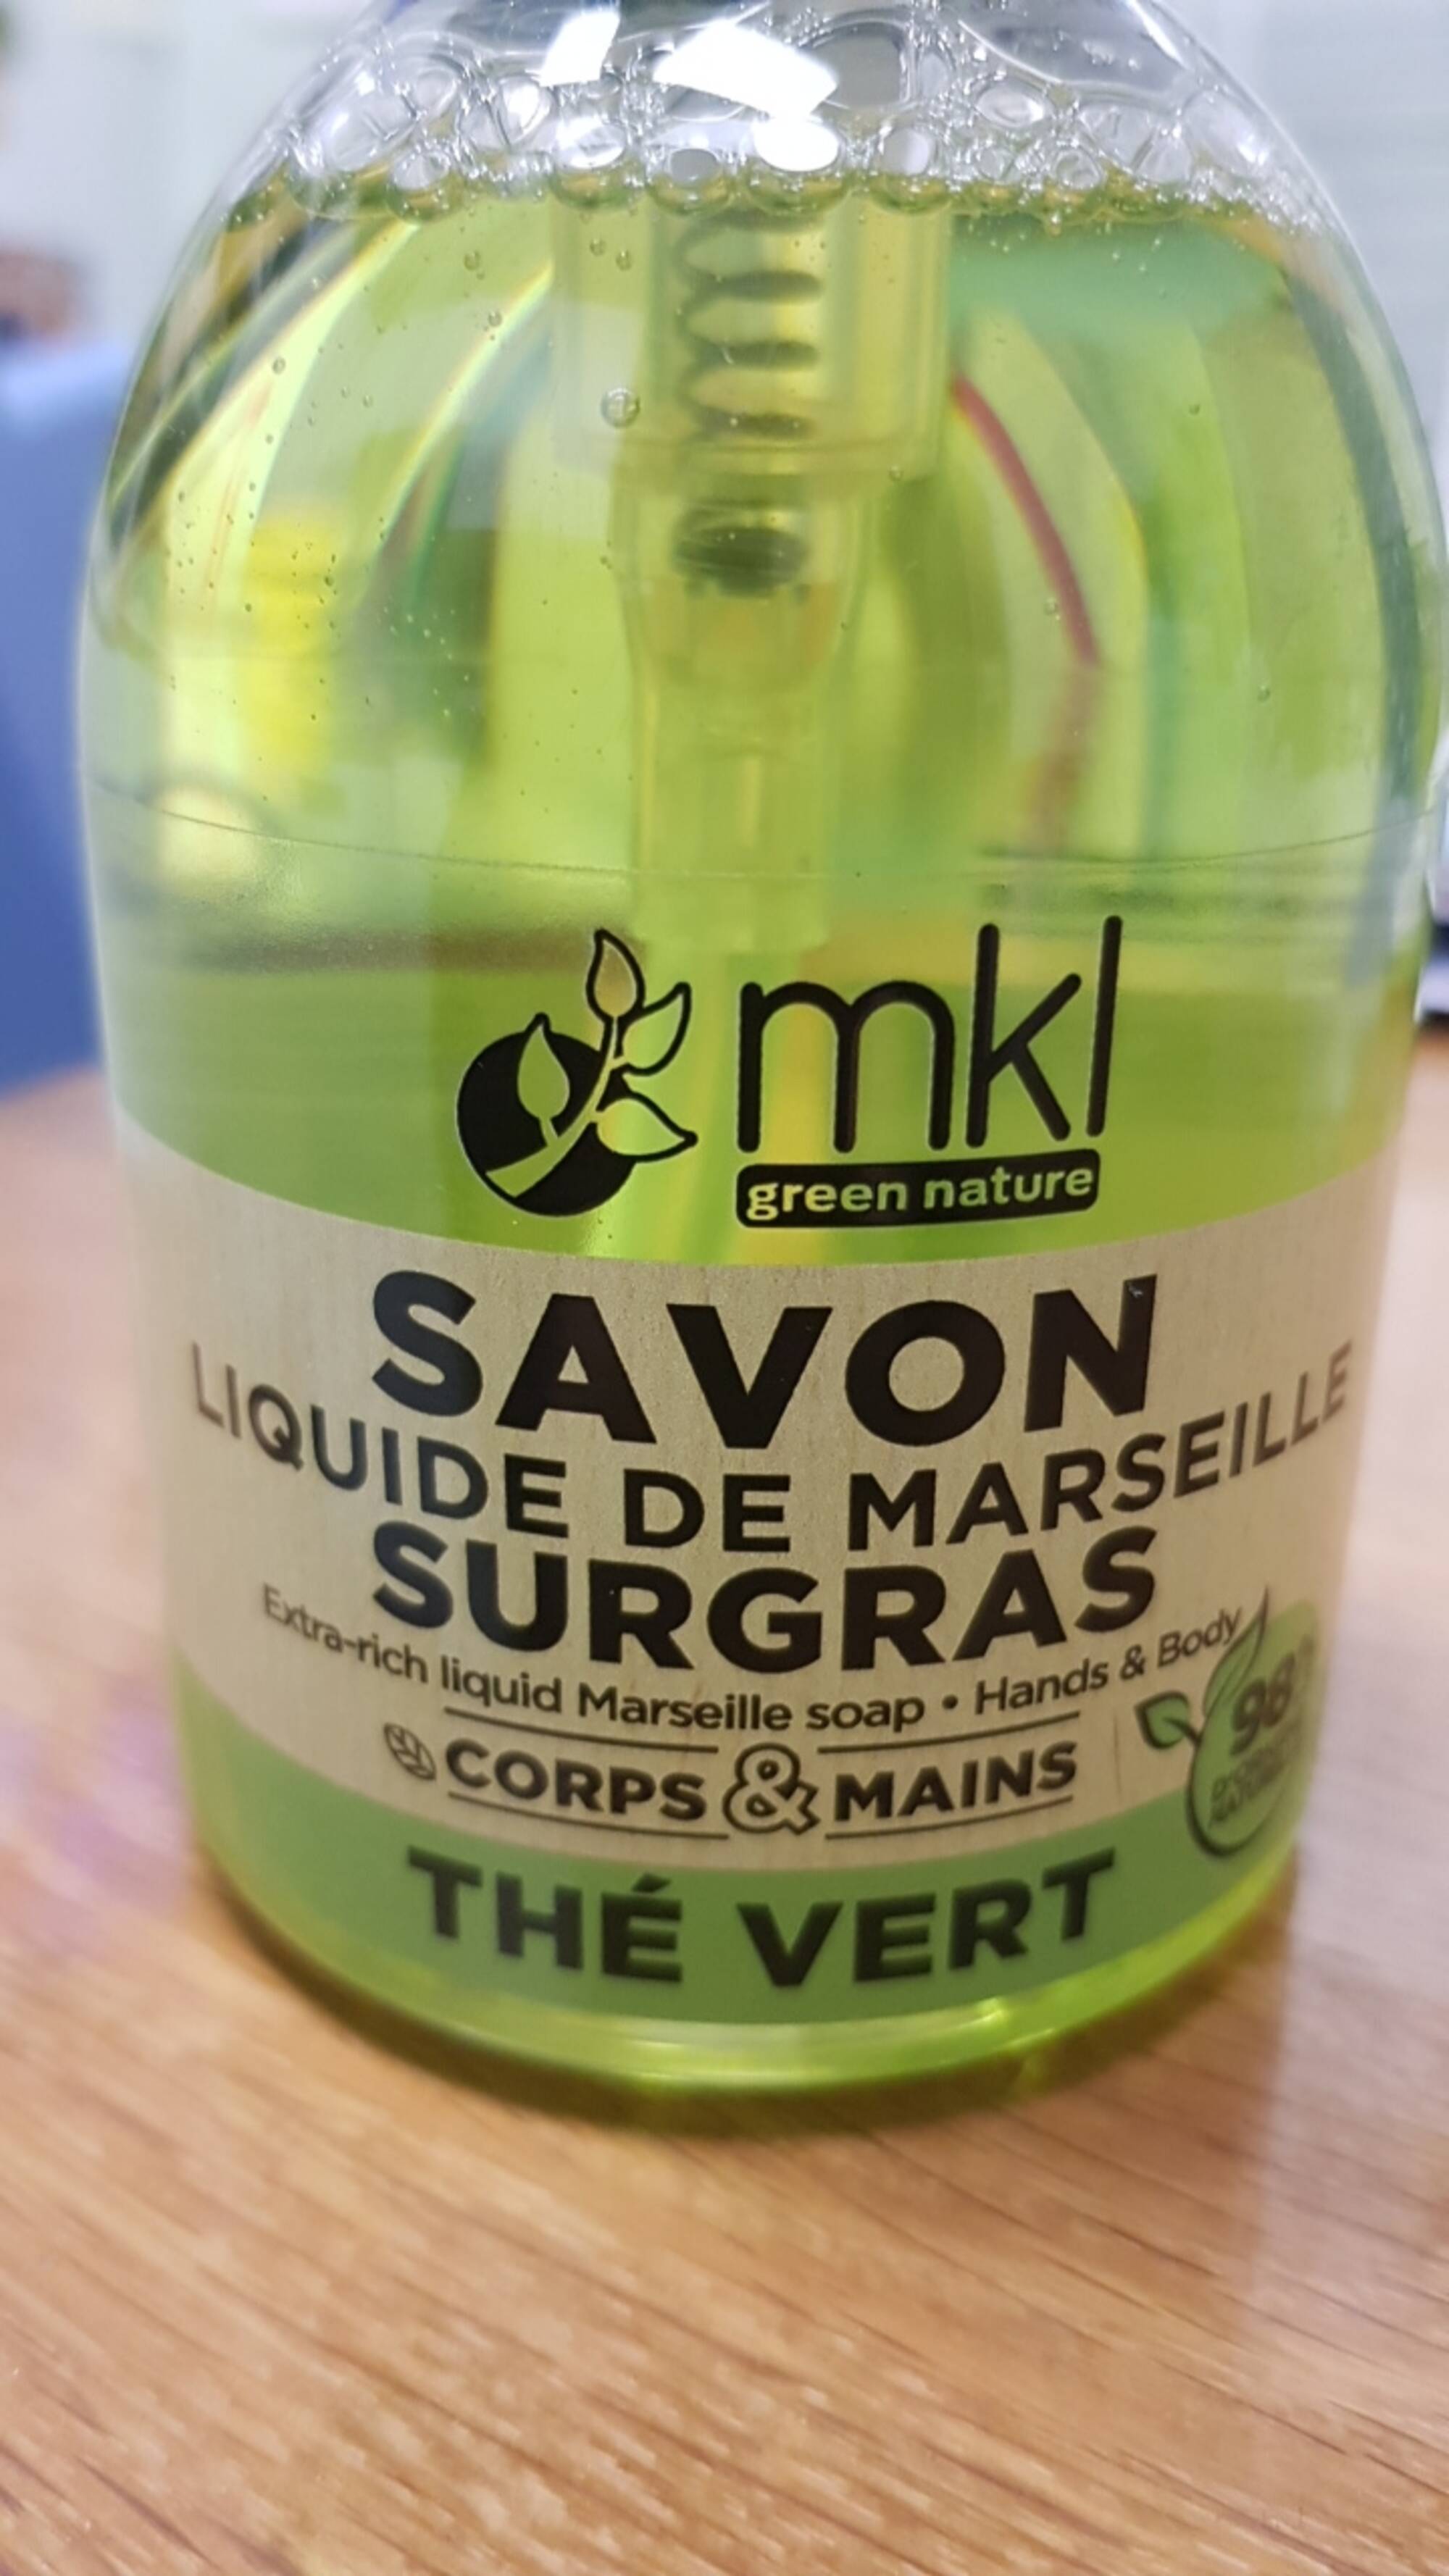 MKL GREEN NATURE - Thé vert - Savon liquide de marseille surgras